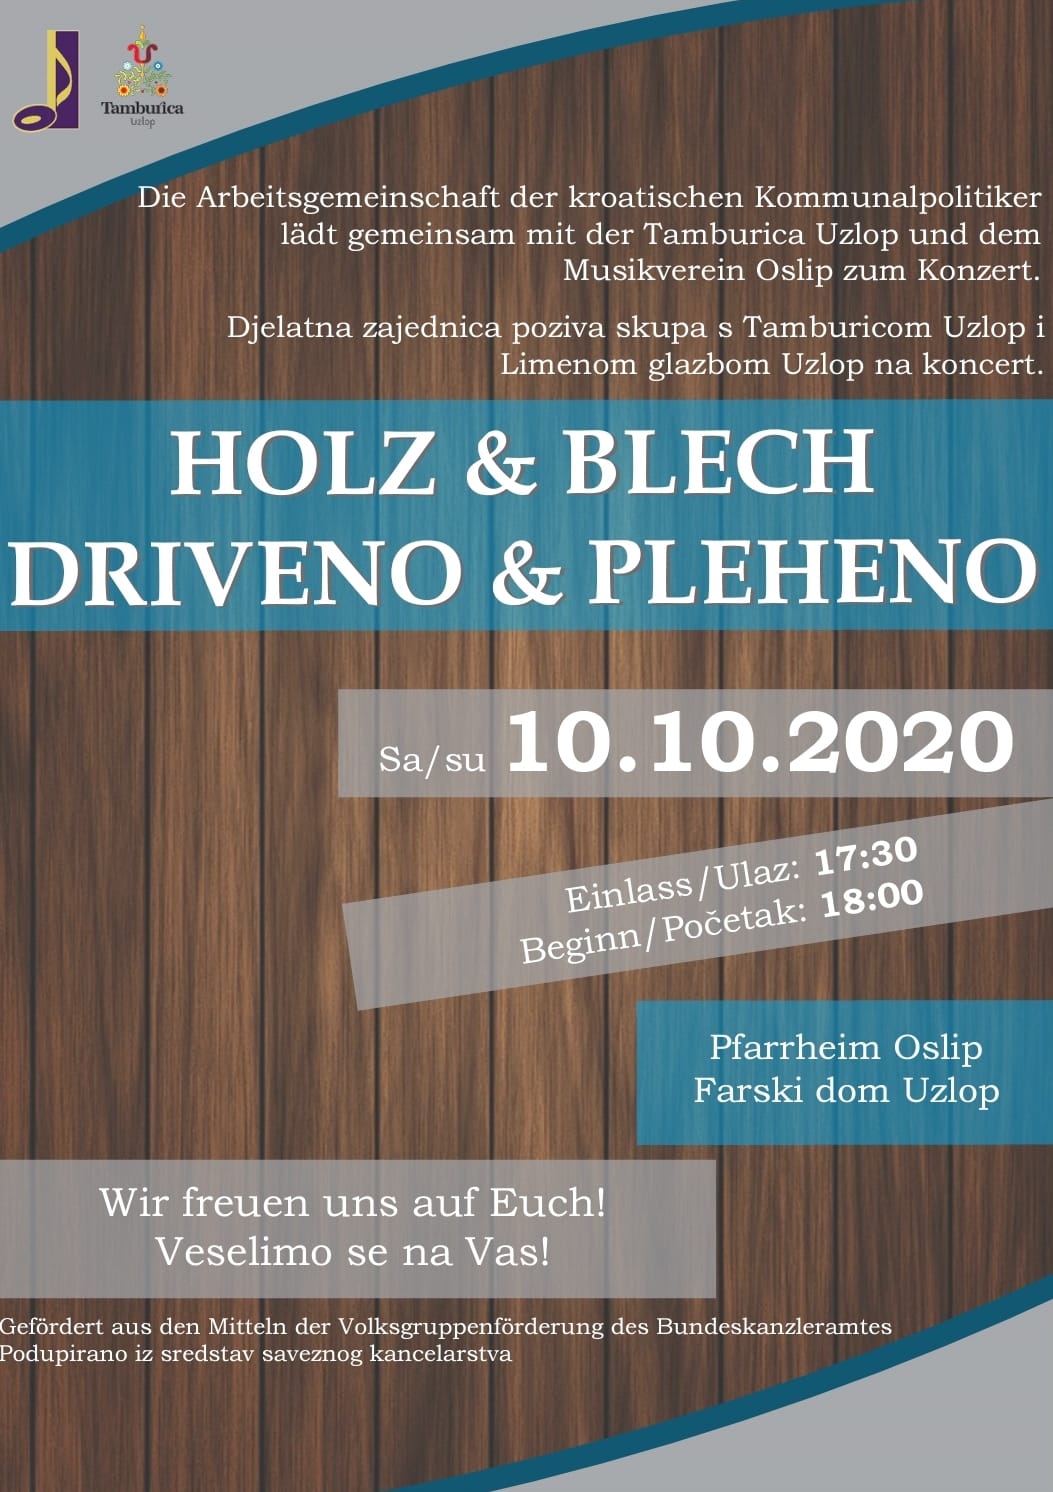 DRIVENO & PLEHENO | HOLZ & BLECH